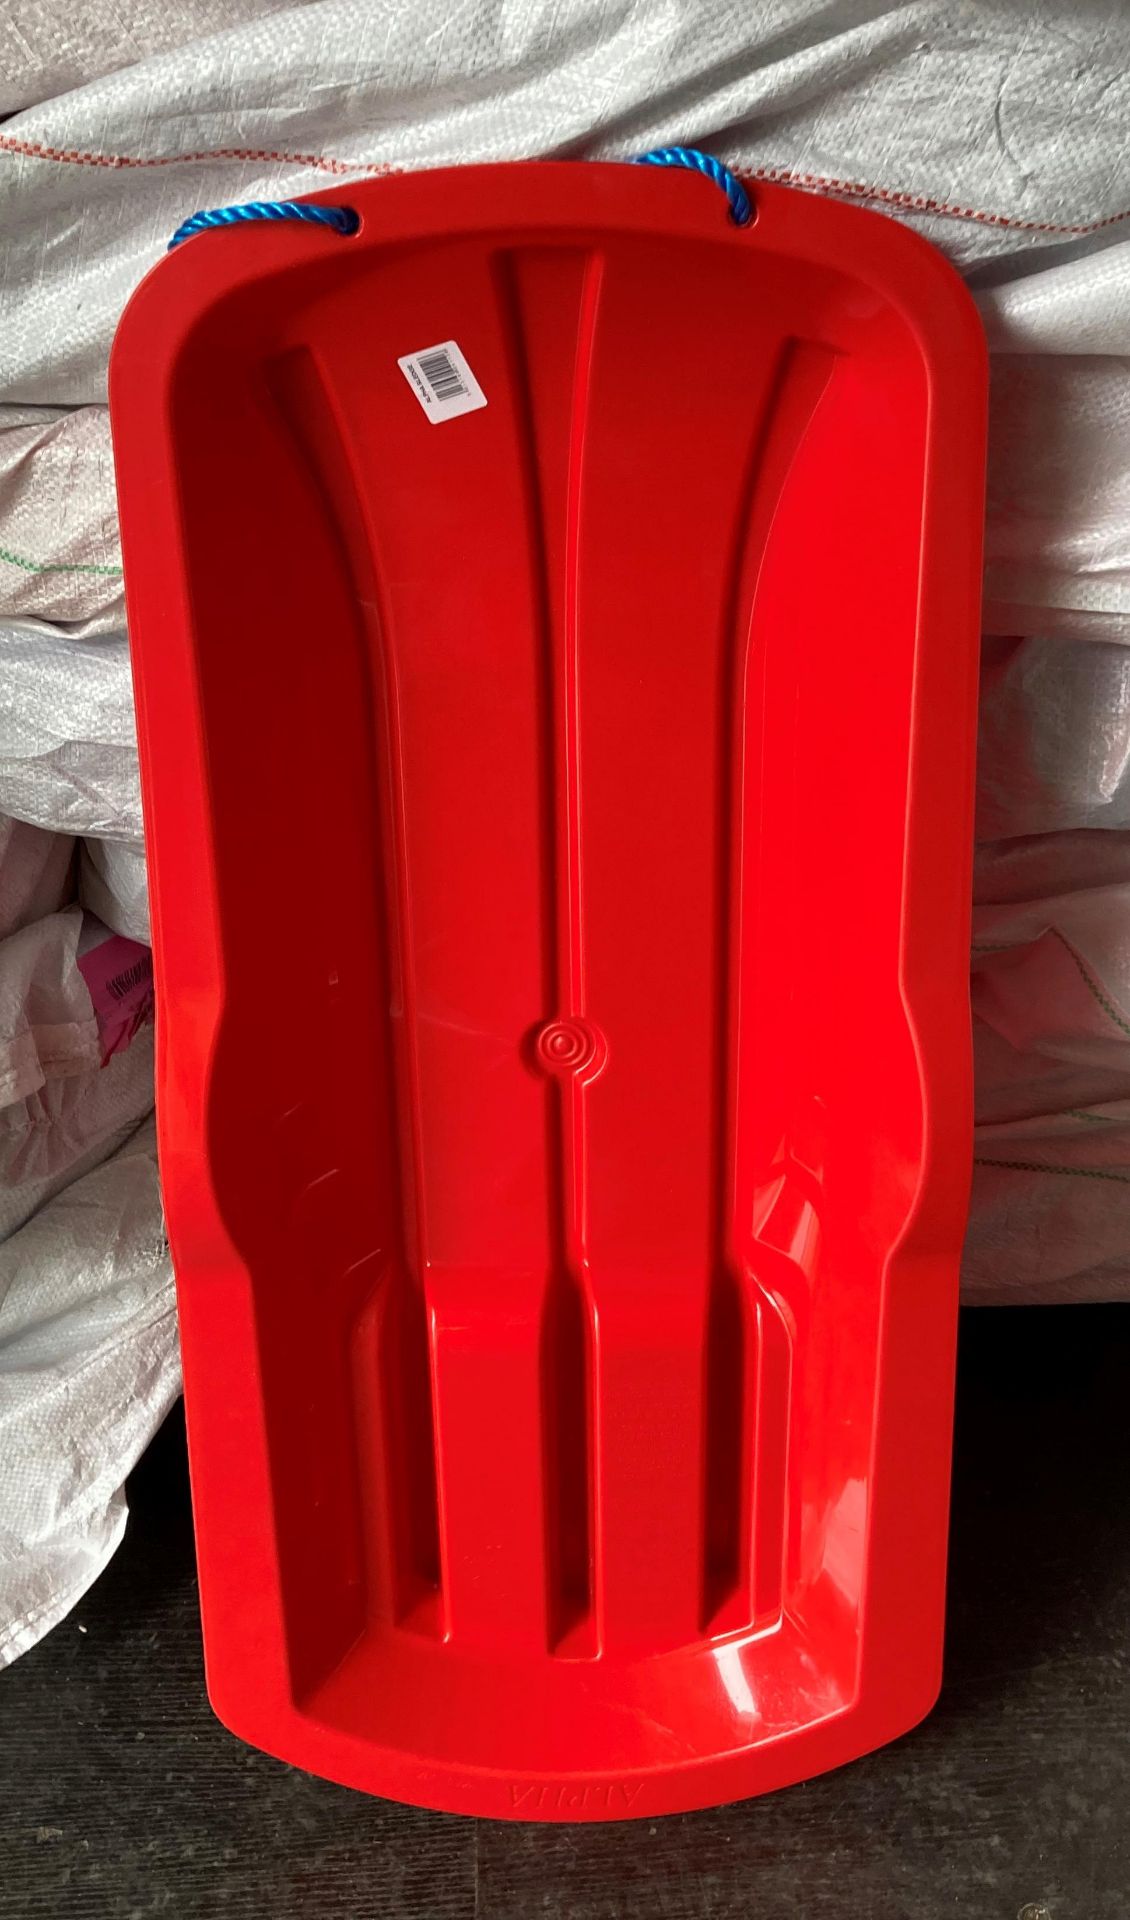 20 x Asra Alpha children's sledges - red (2 x sacks) (saleroom location: container 9)